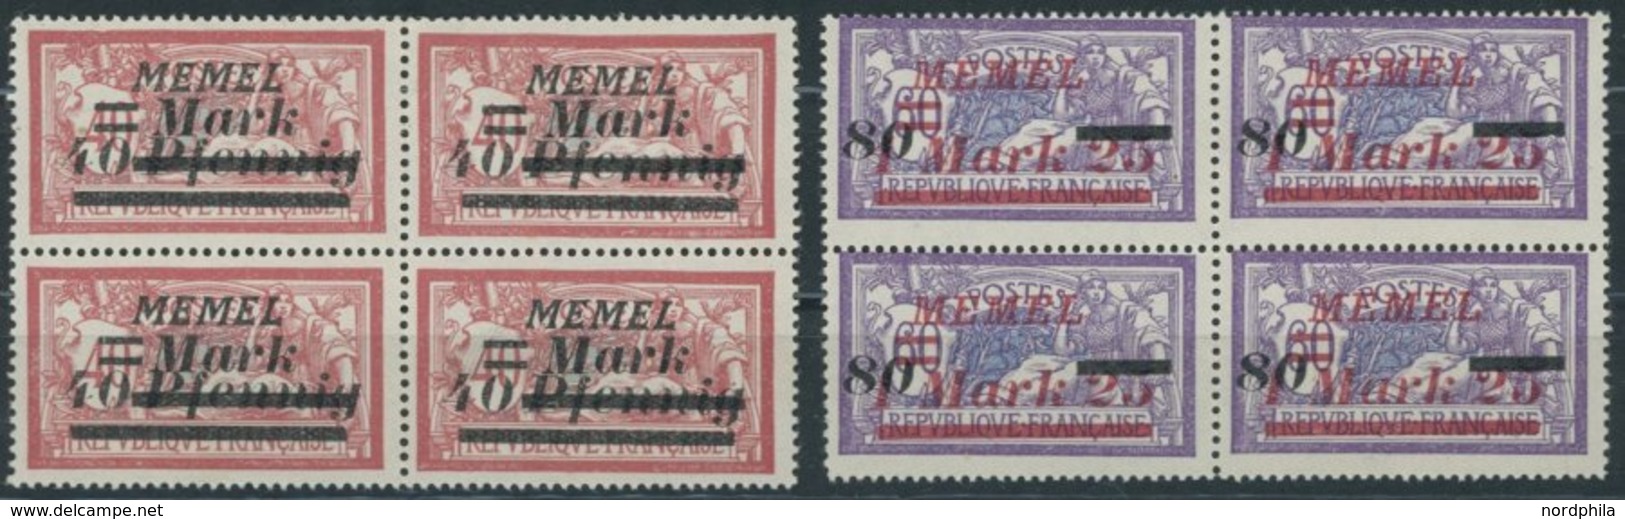 MEMELGEBIET 110-20 VB **, 1922, Staatsdruckerei Paris In Viererblocks, 2 Postfrische Prachtsätze, Mi. 336.- - Klaipeda 1923